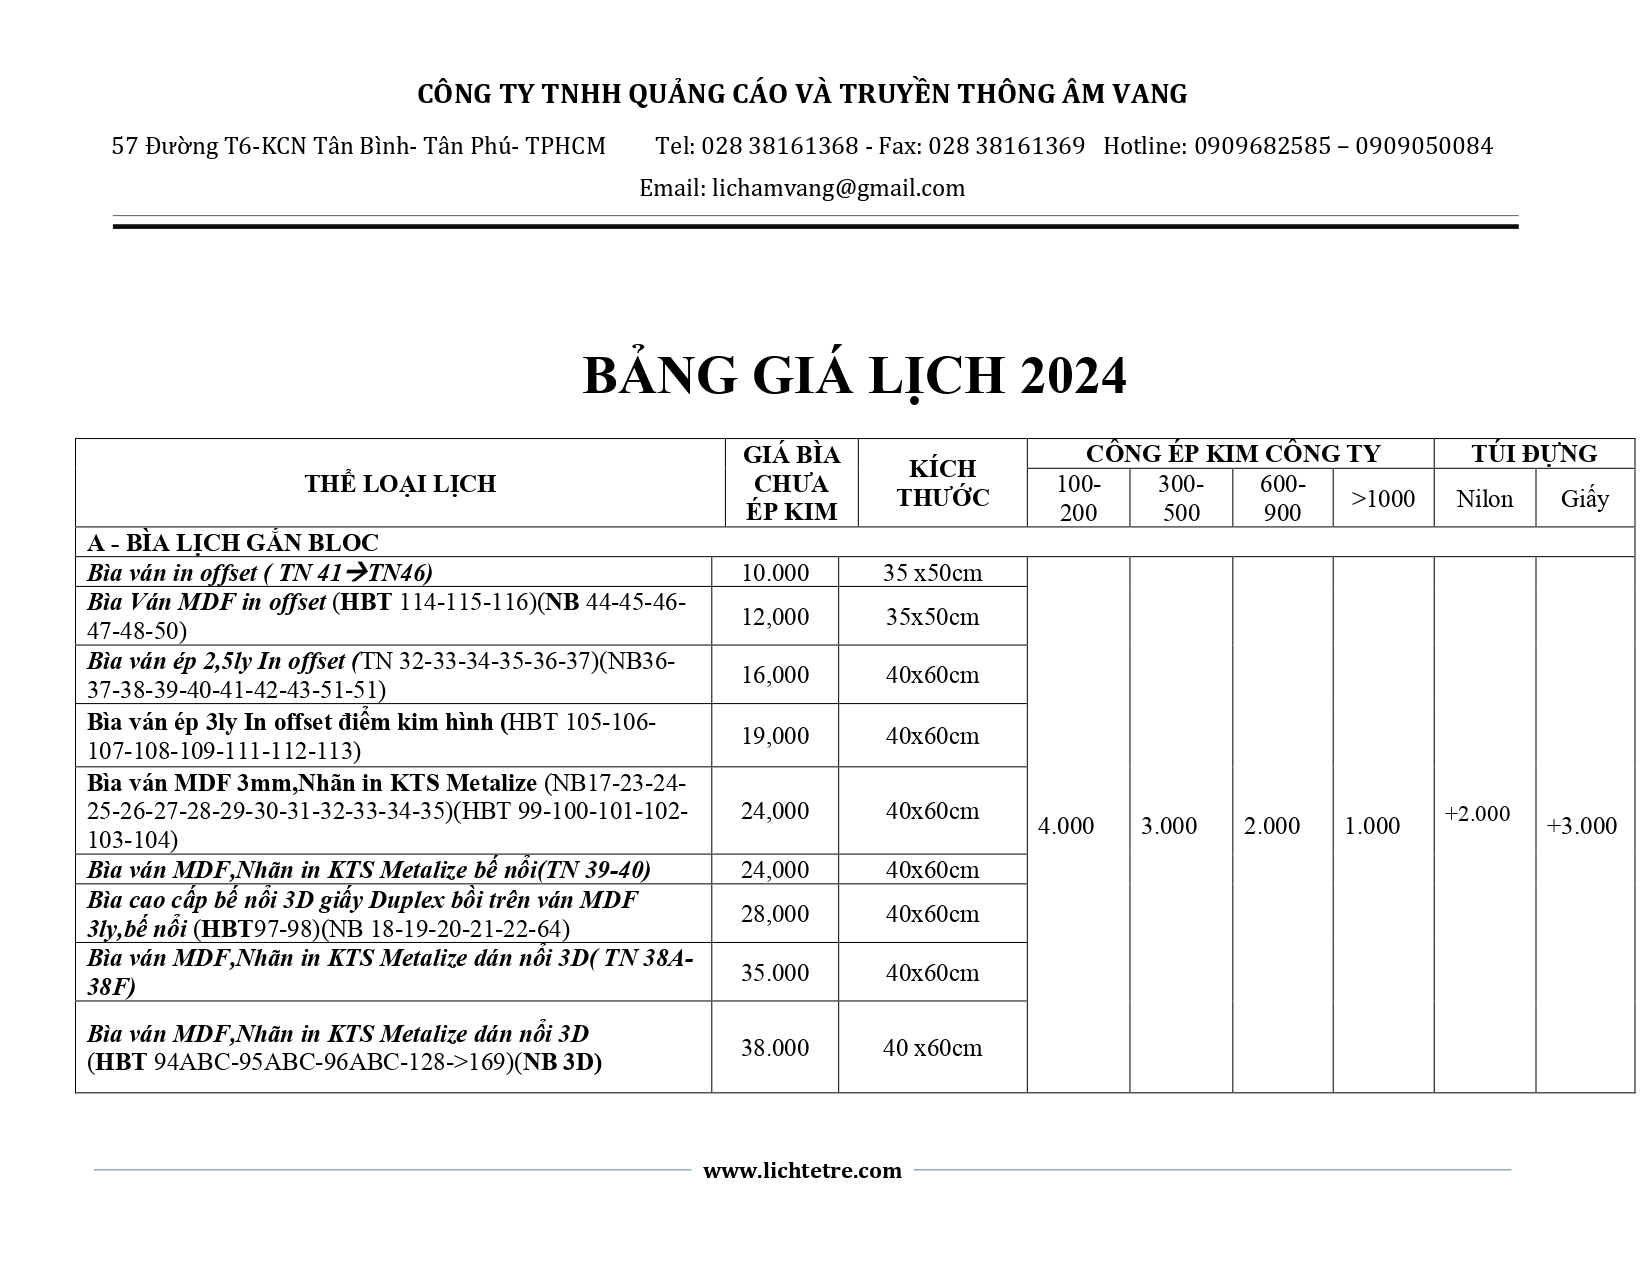 bang-gia-lich-nam-2024_page-0001